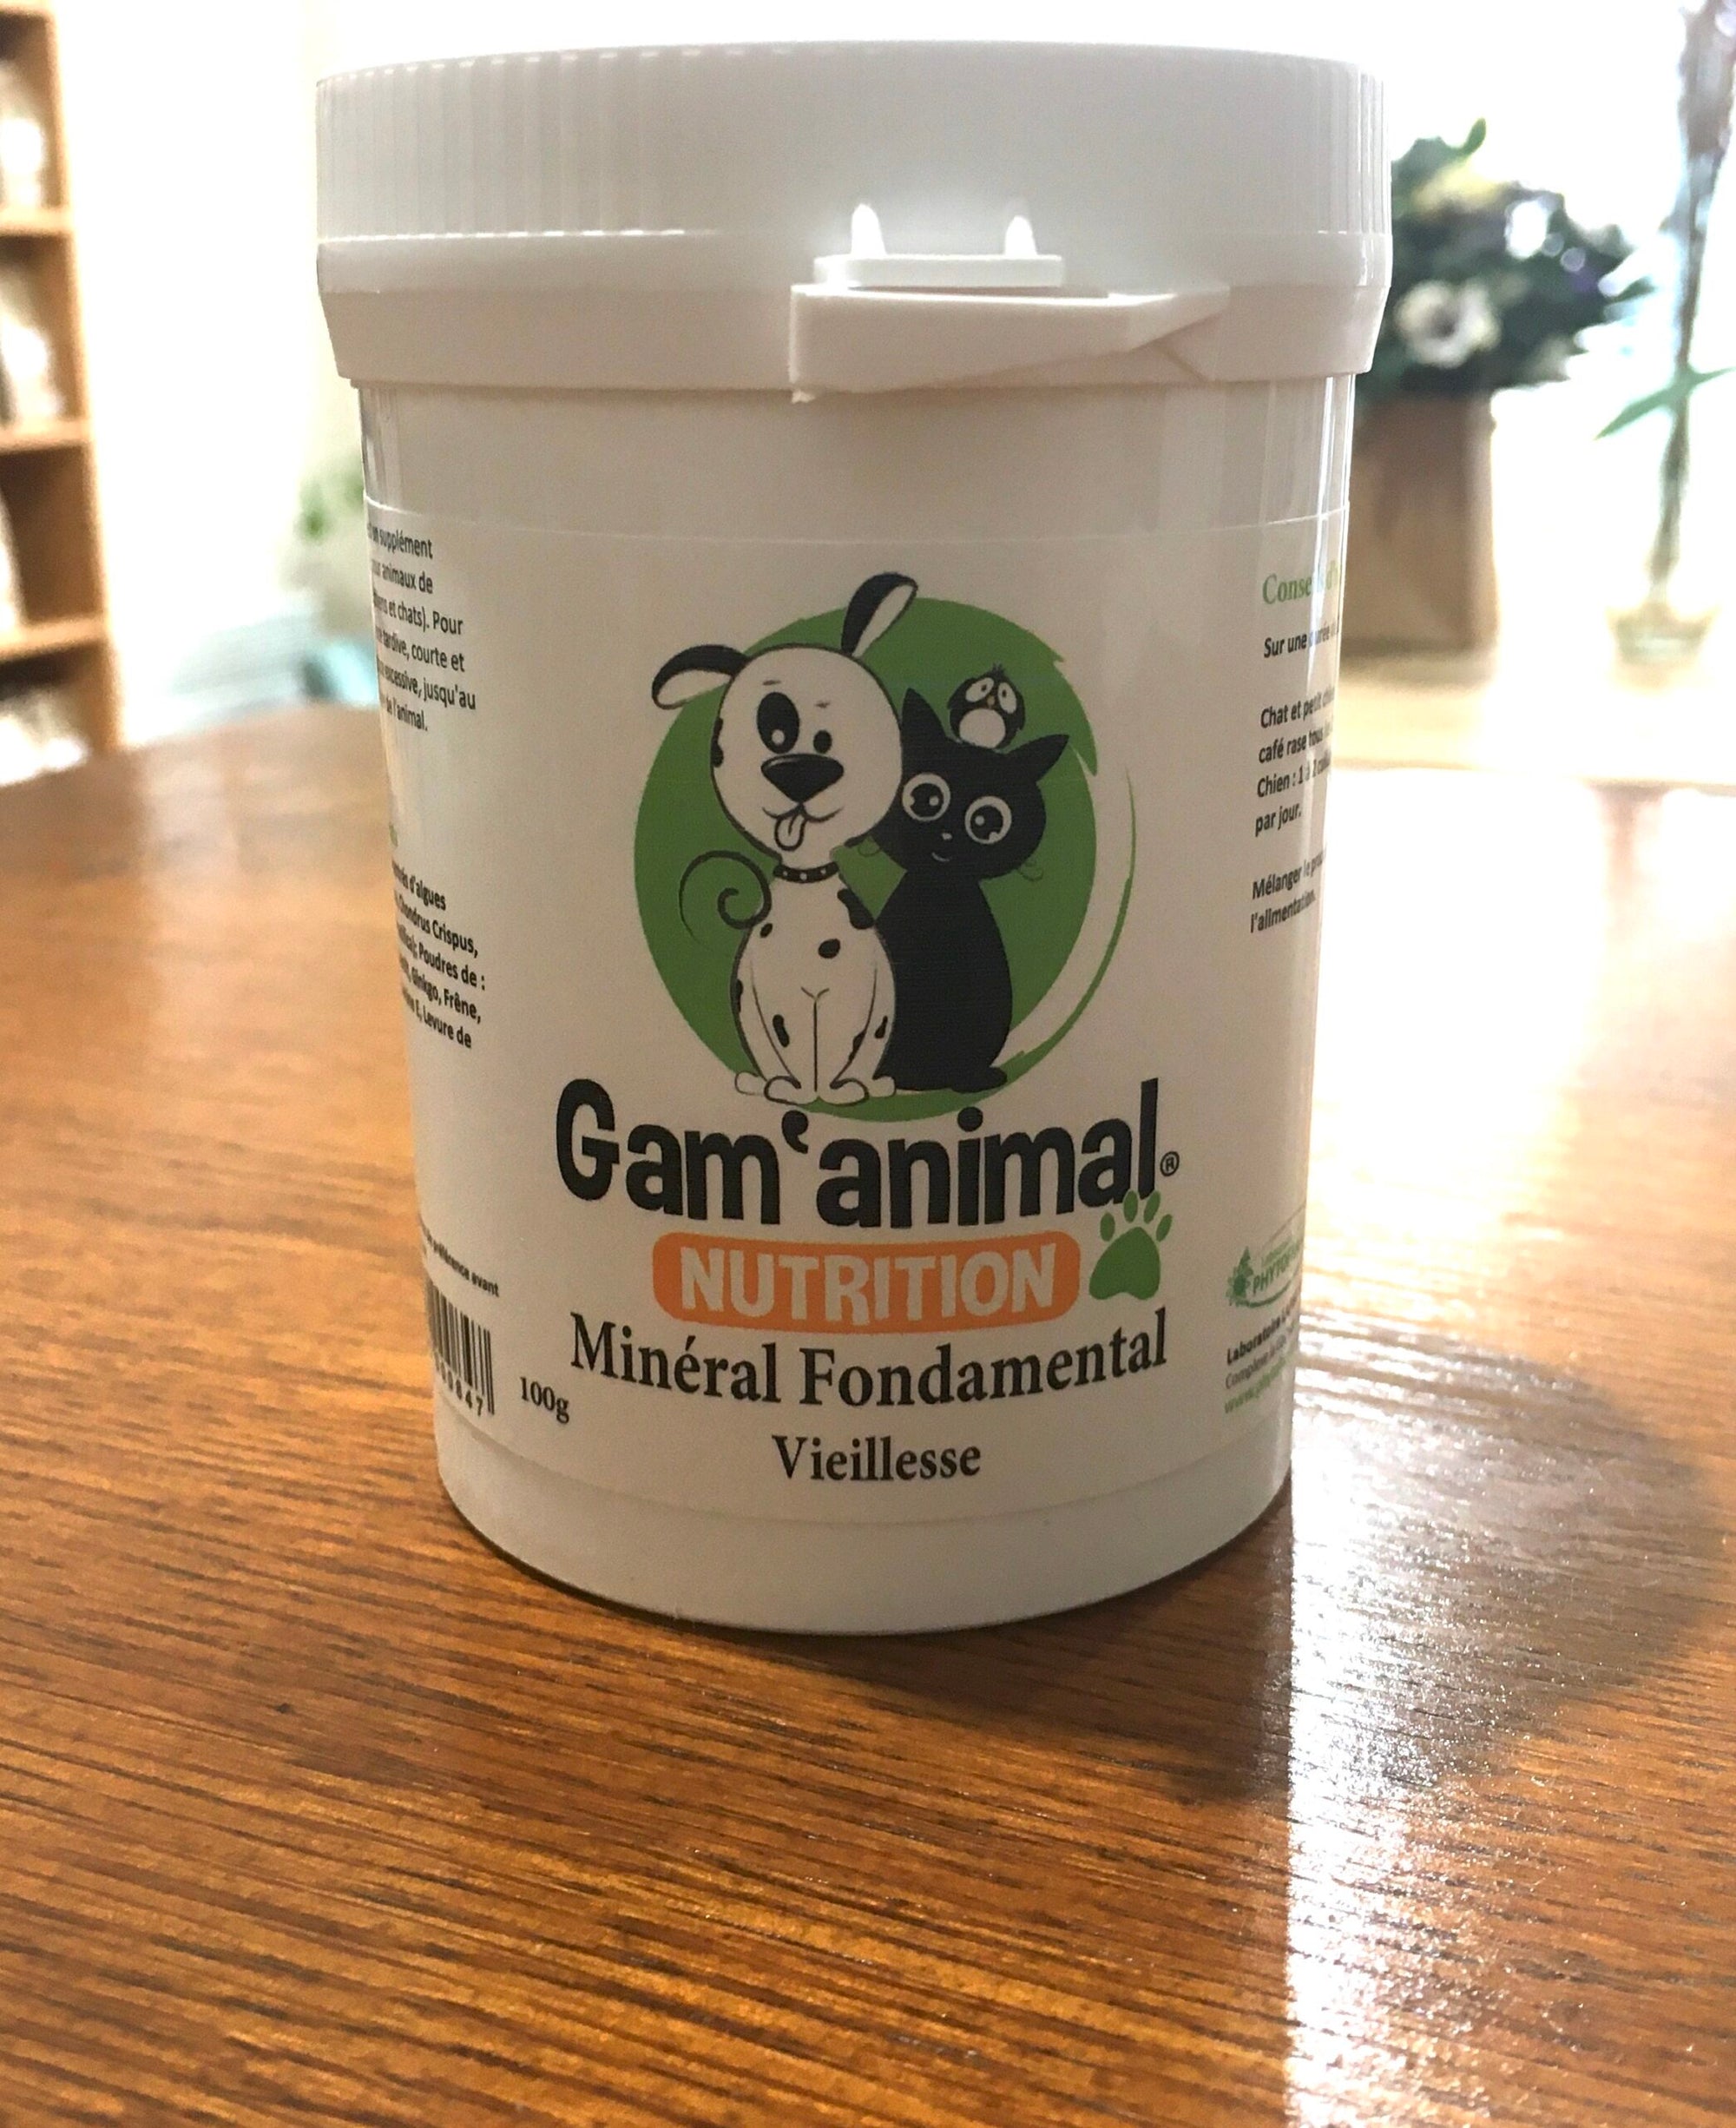 Gam’animal Nutrition - Vieillesse